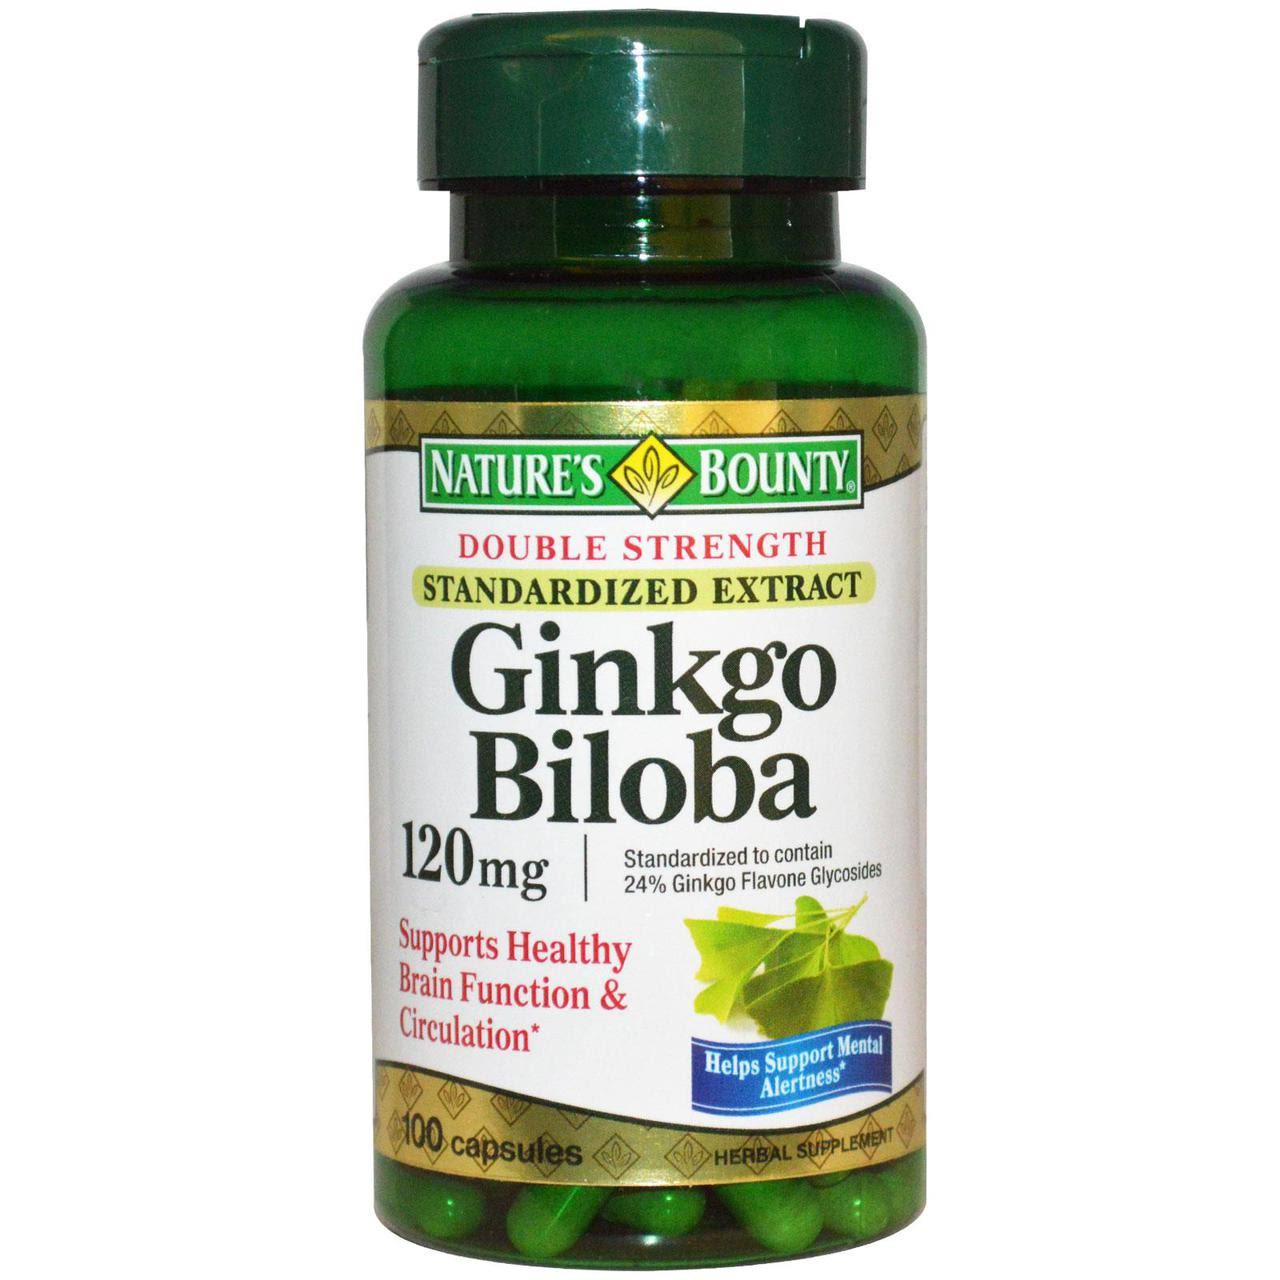 Nature's Bounty Double Strength Ginkgo Biloba Capsules - 120mg, 100 Pack